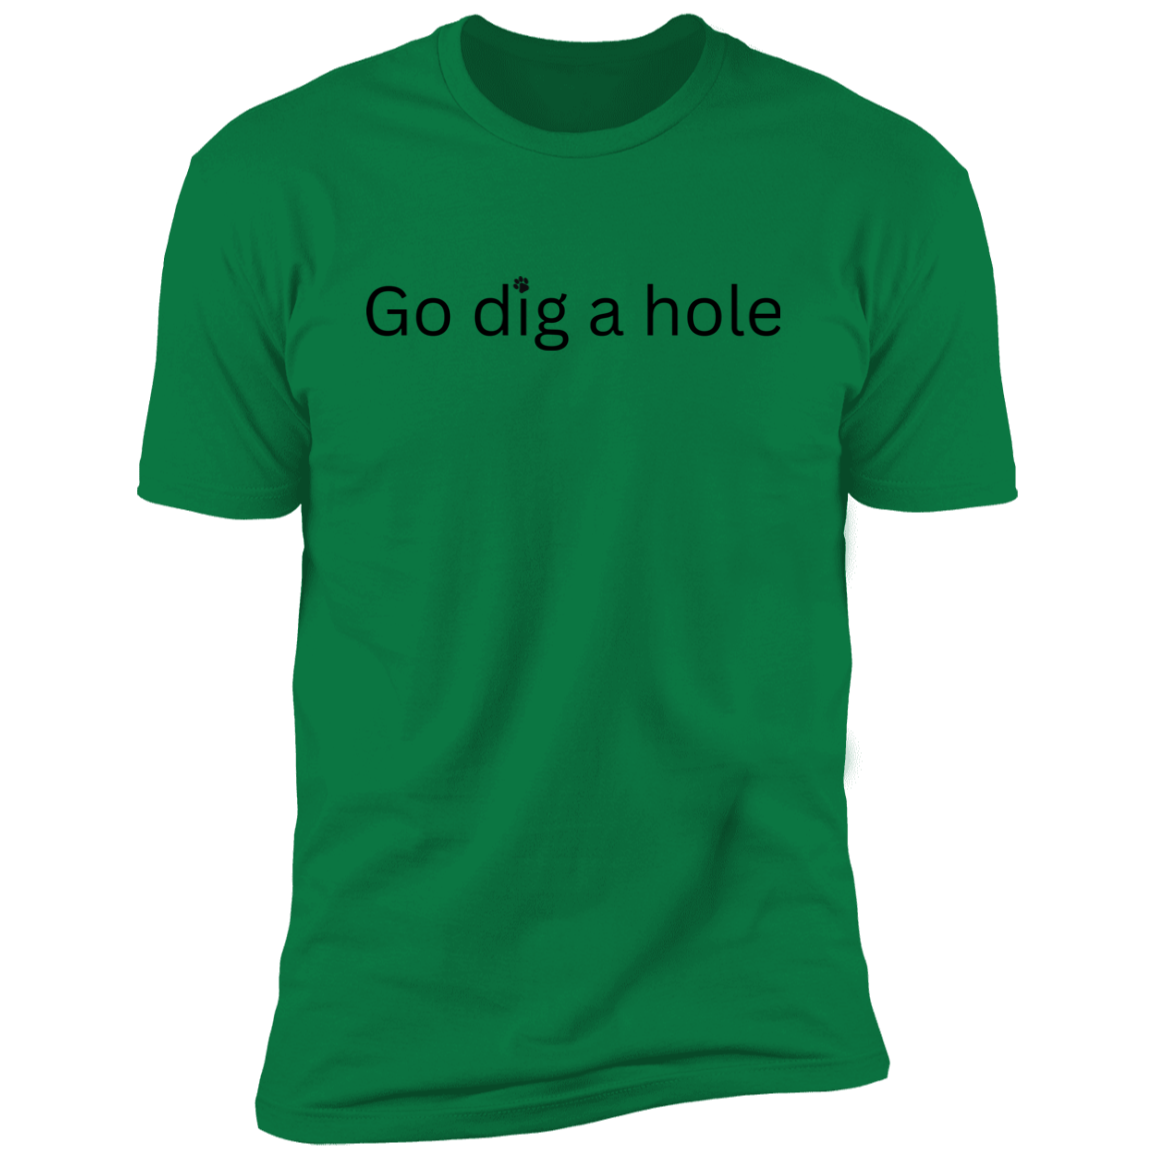 Go Dig a Hole Dog T-Shirt, Dog shirt for humans, funny dog shirt, funny t-shirt, in kelly green